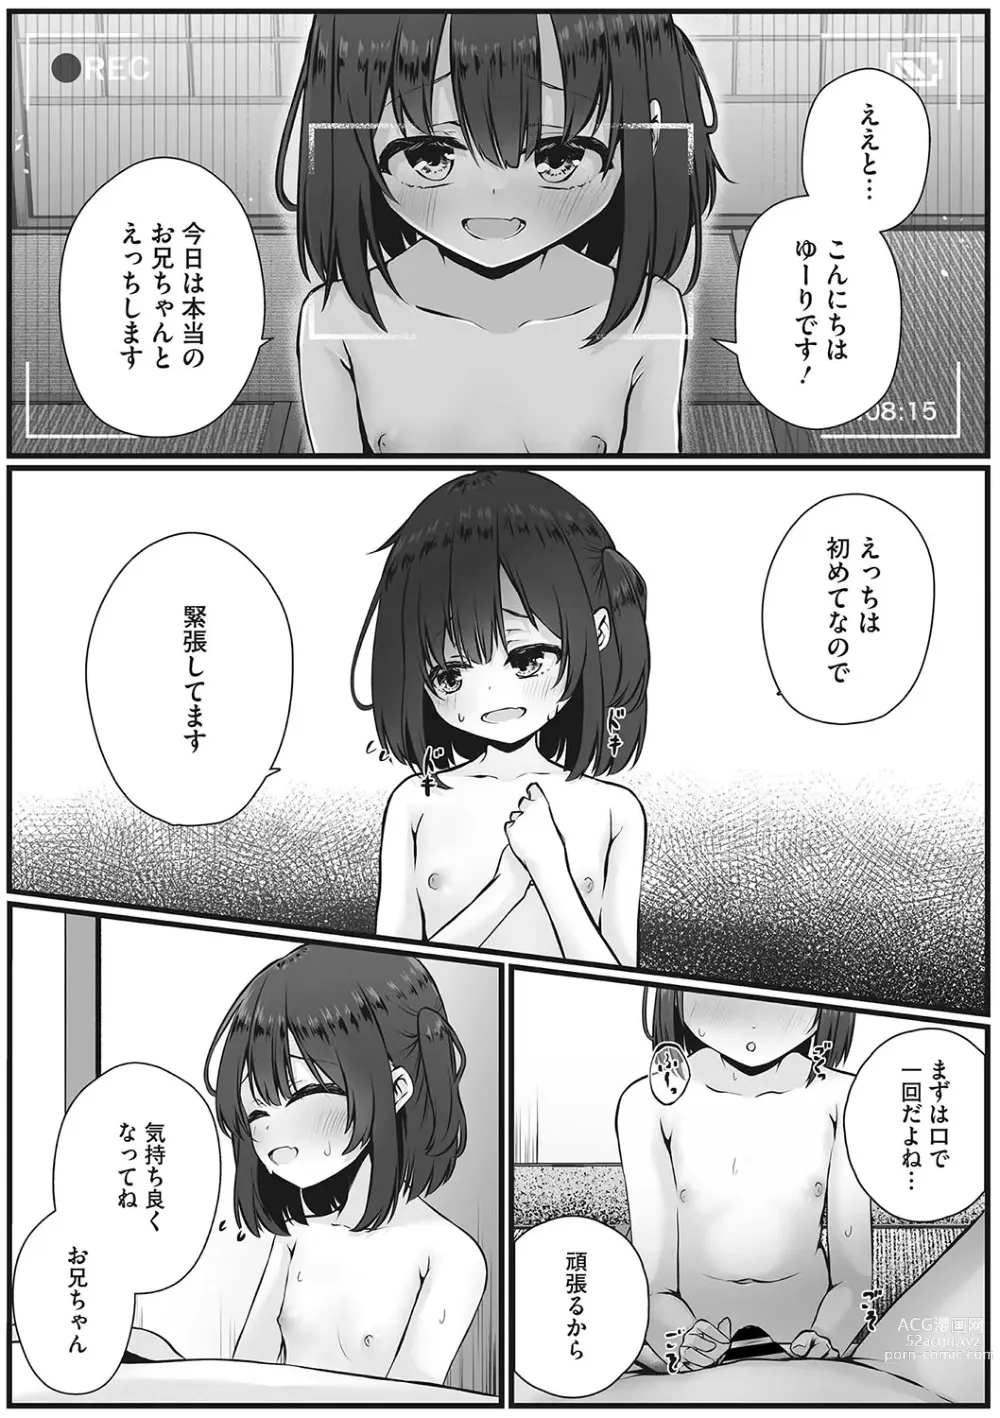 Page 9 of manga Little Girl Strike Vol. 28